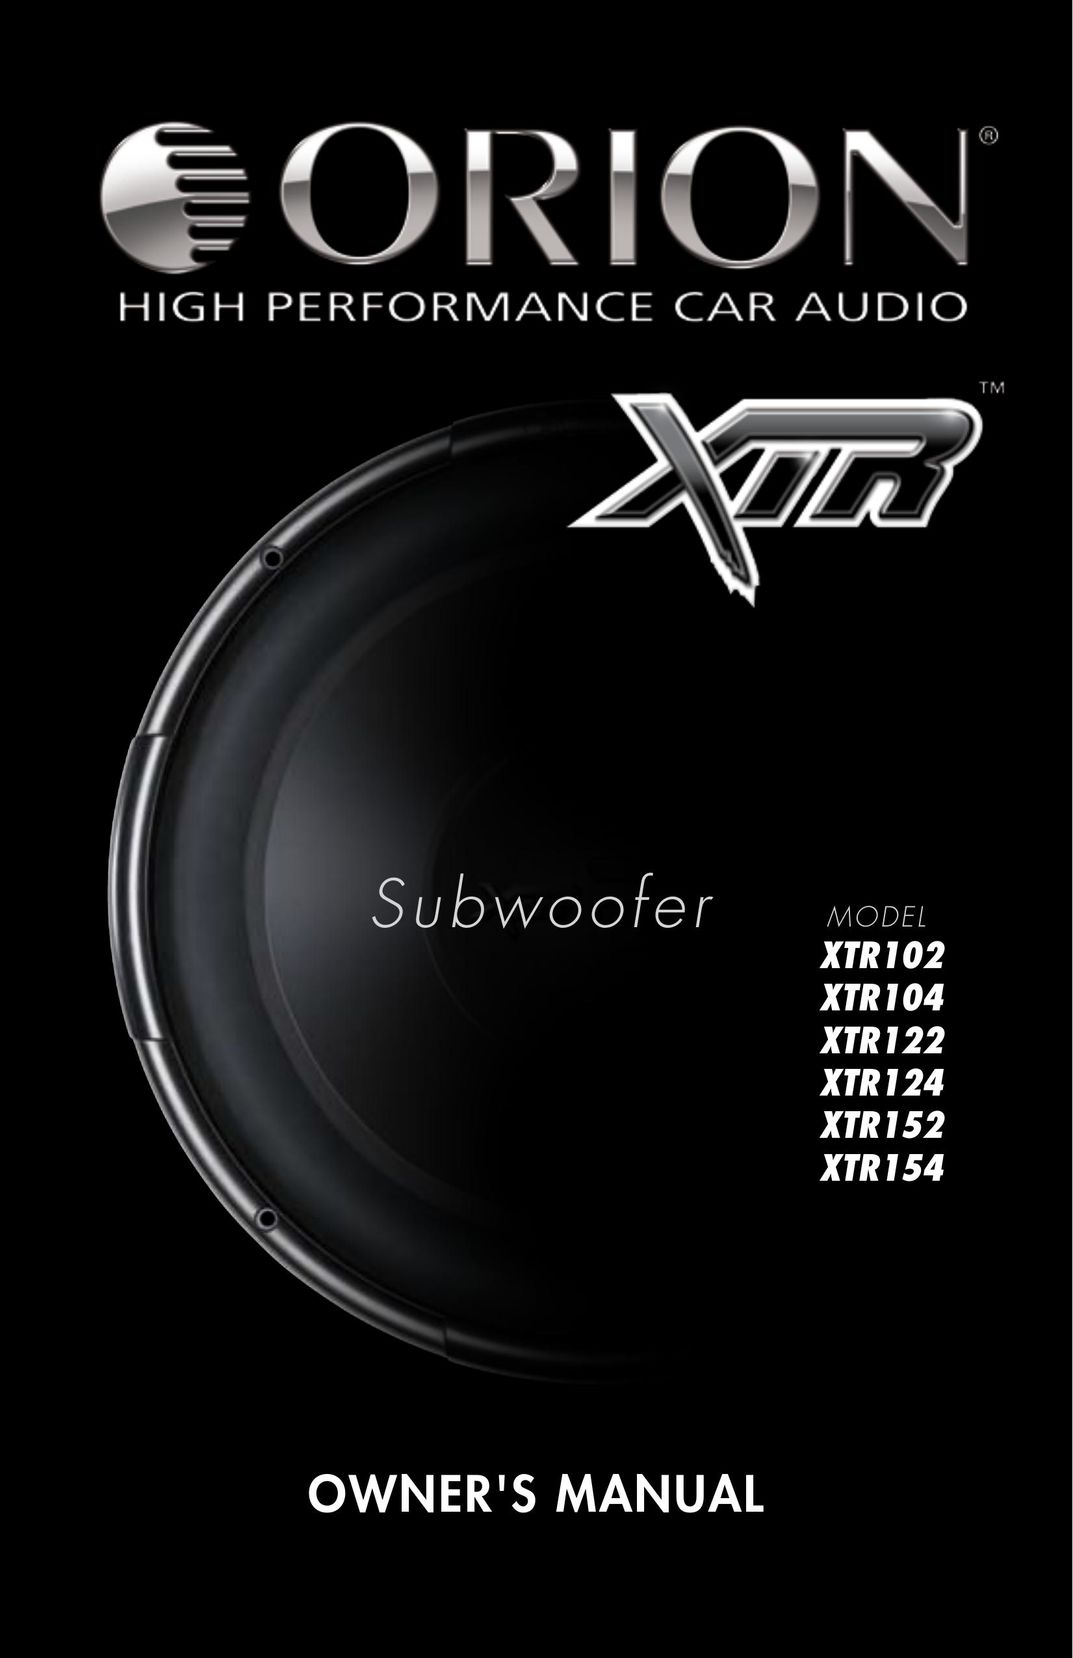 Orion Car Audio XTR154 Speaker User Manual